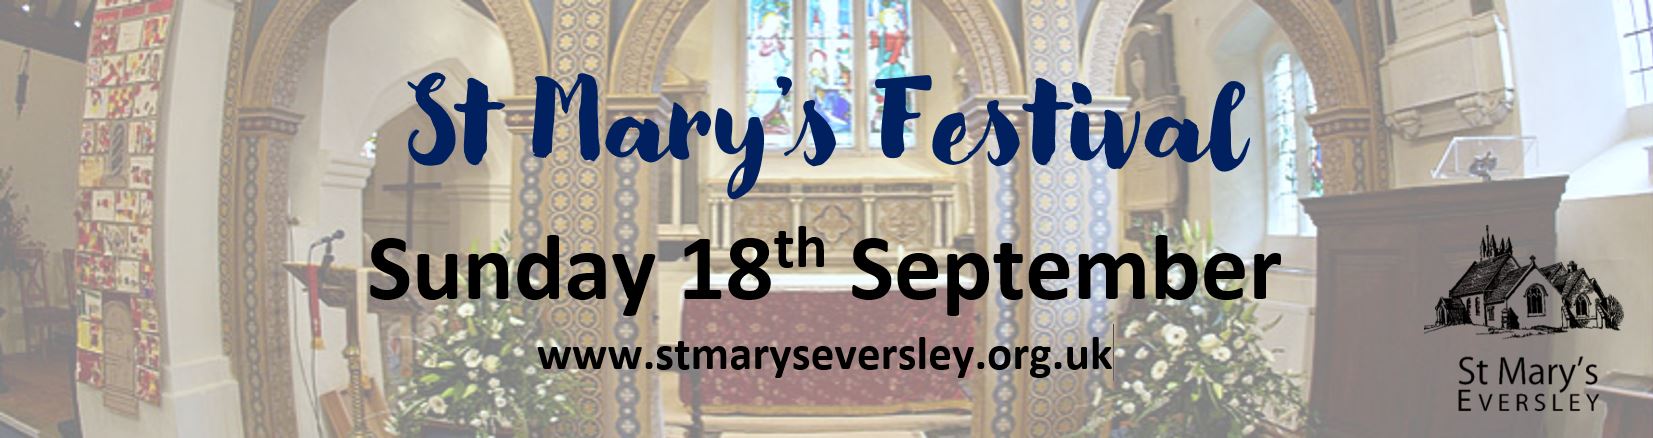 St Mary's Eversley Festival